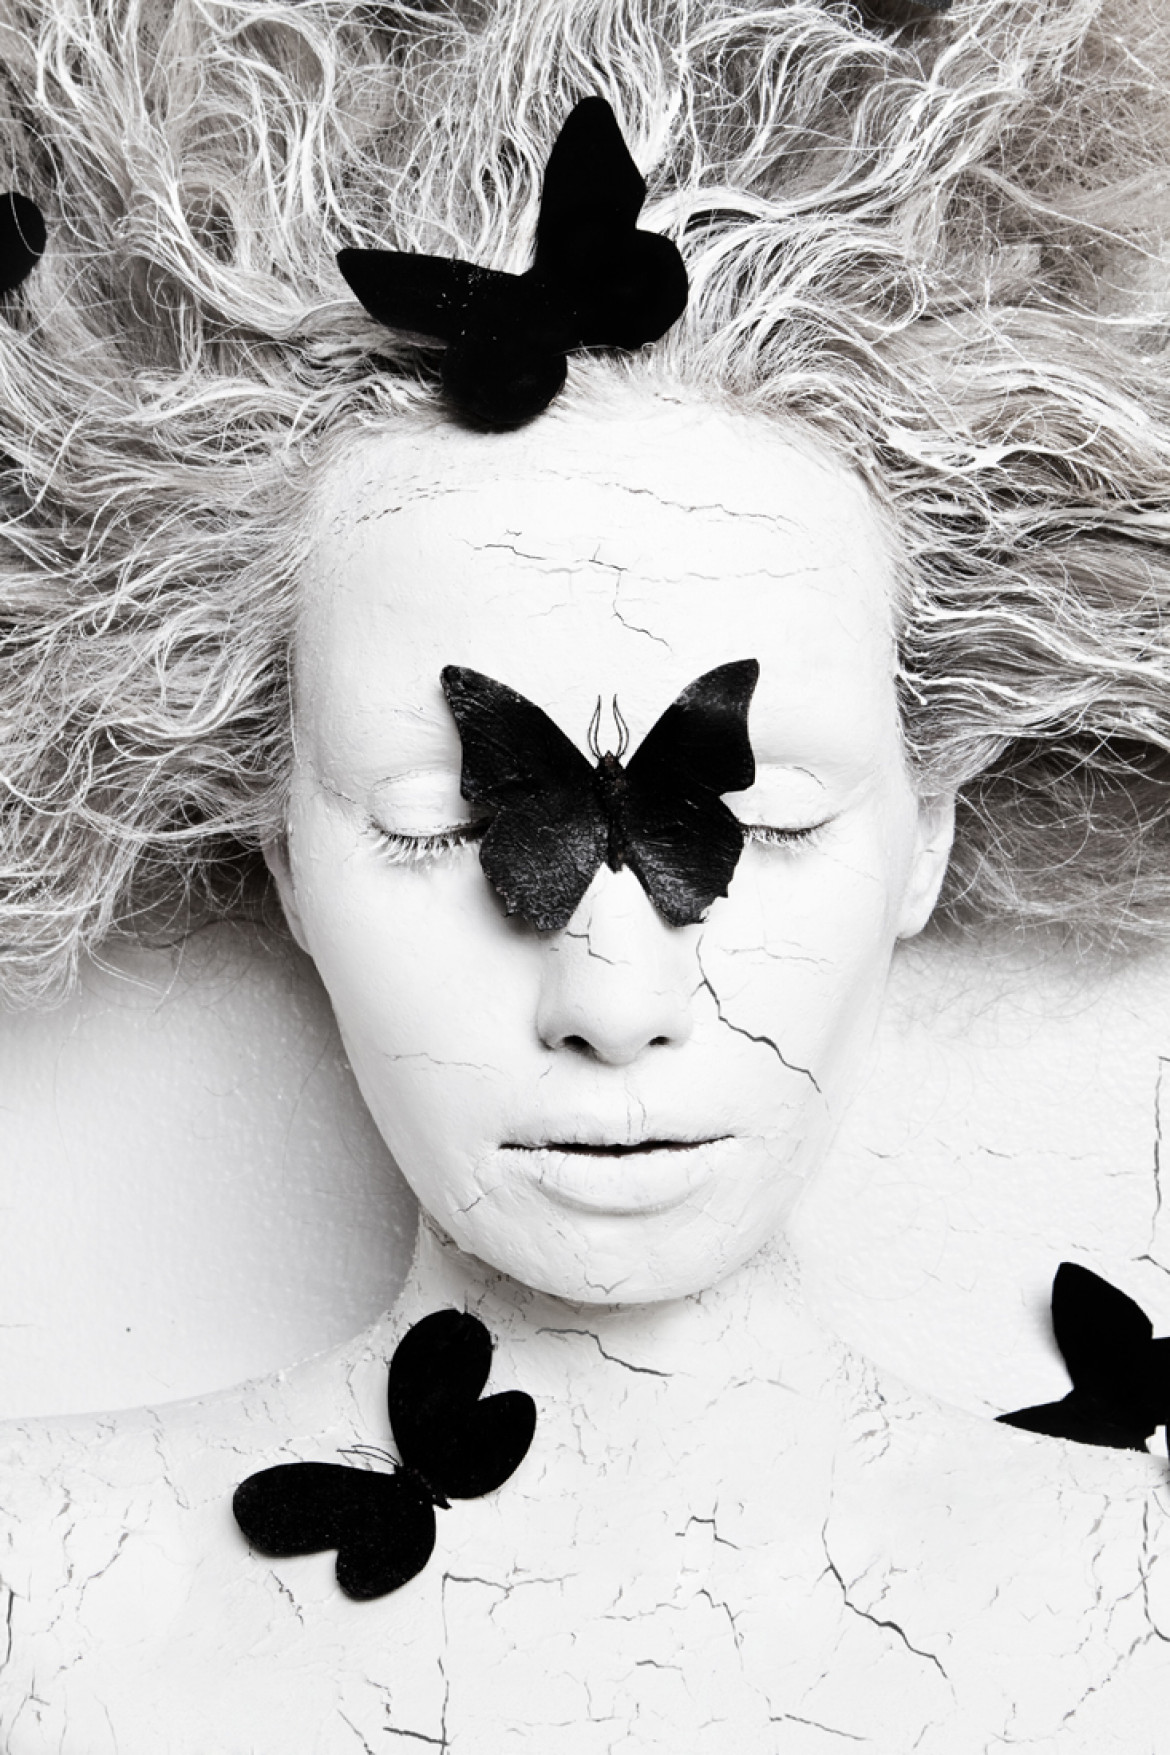 fot. Olga Volodina, z cyklu "Metamorphosis. Black Butterfly", 2. miejsce w kategorii Conceptual / Series